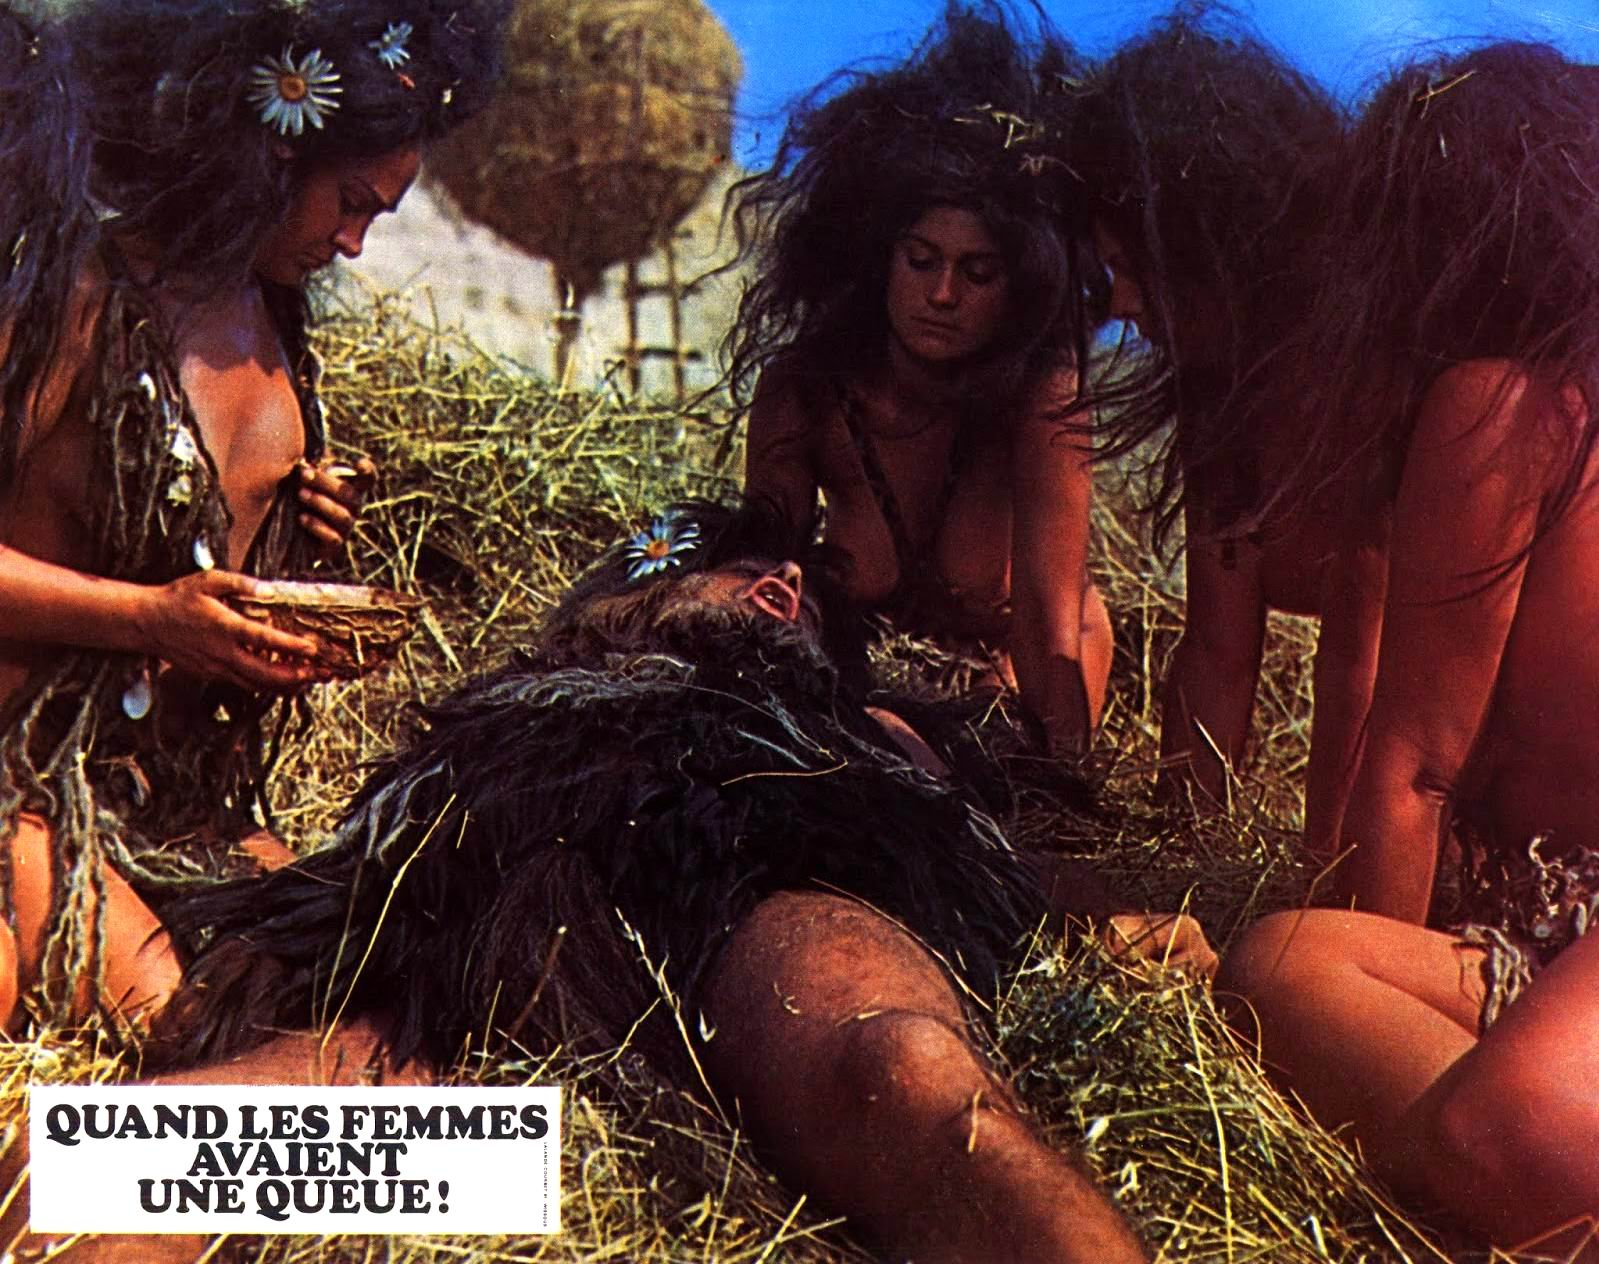 Quand les femmes avaient une queue ! (1970) P. Festa Campanile - Quando le donne avevano la coda